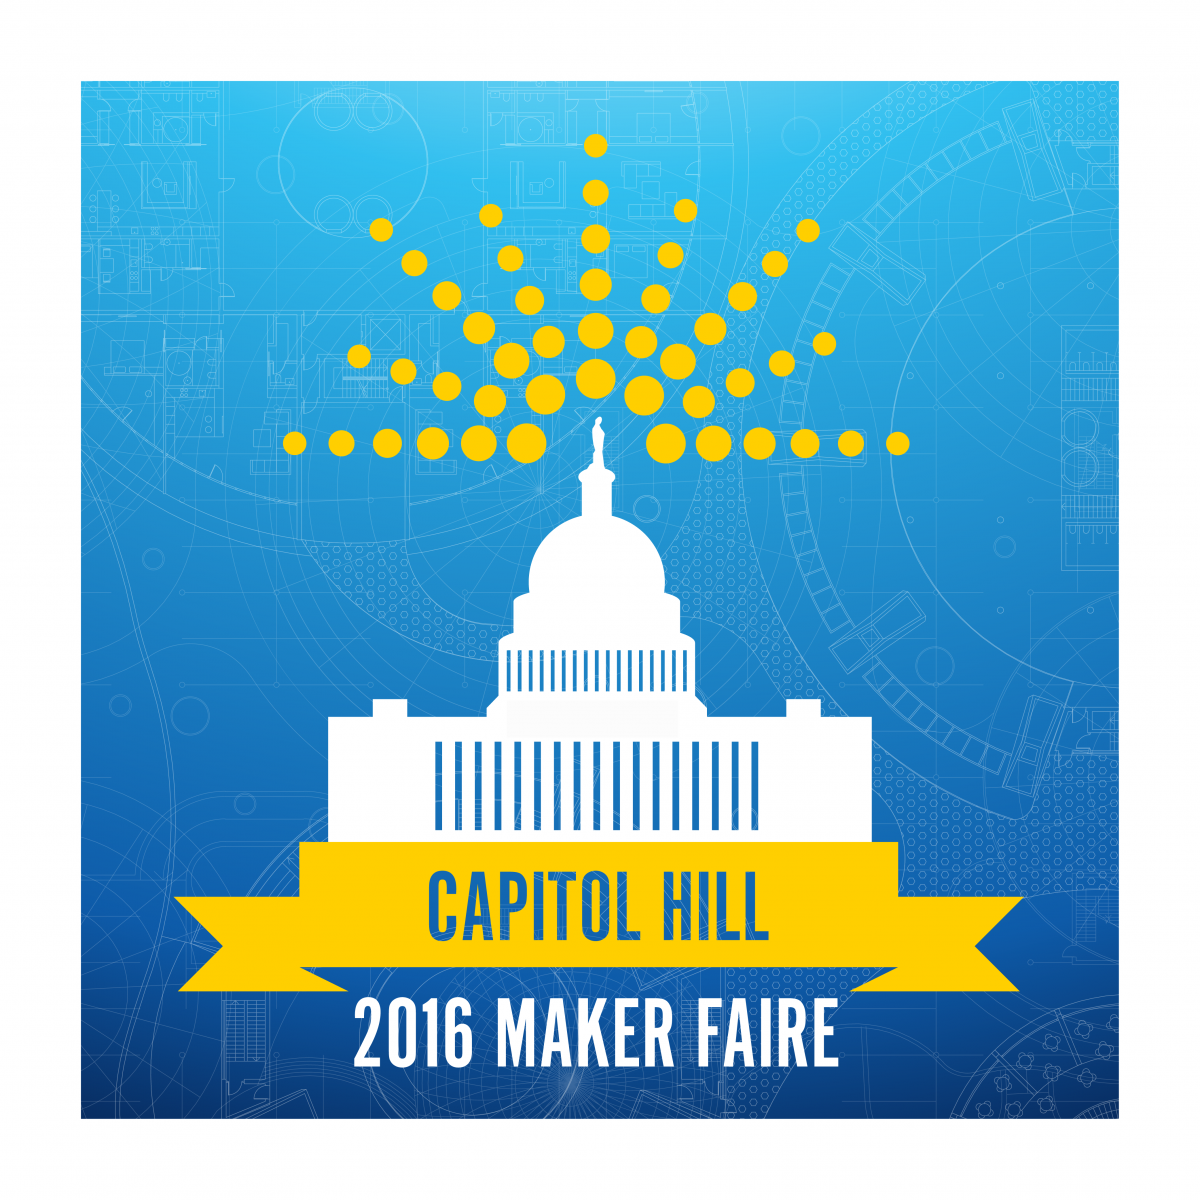 Capitol Hill 2016 Maker Faire